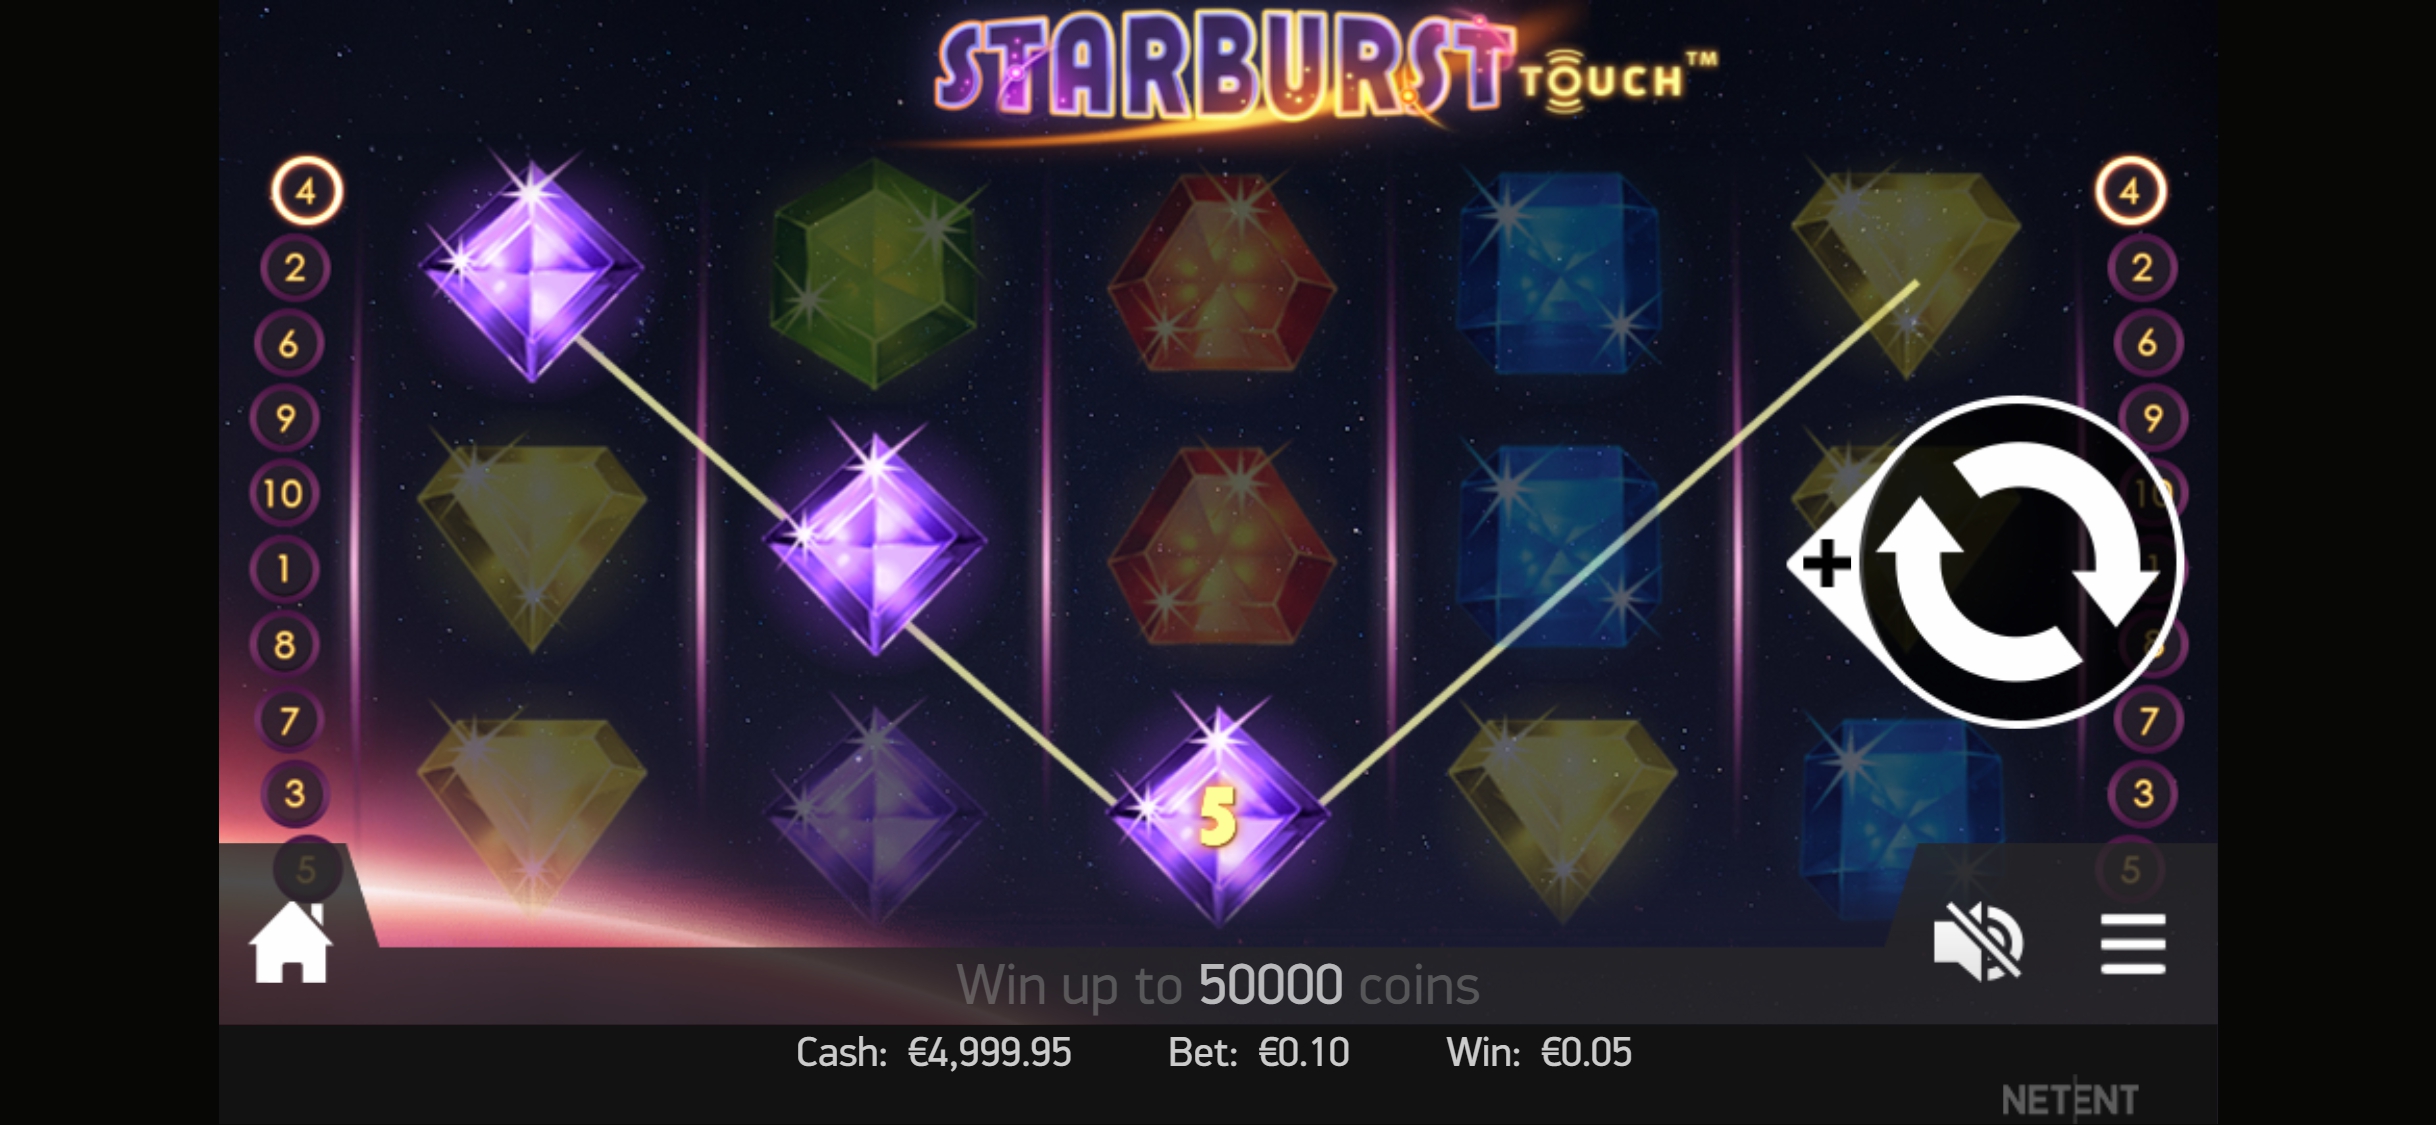 4StarsGames Mobile Slot Games Review